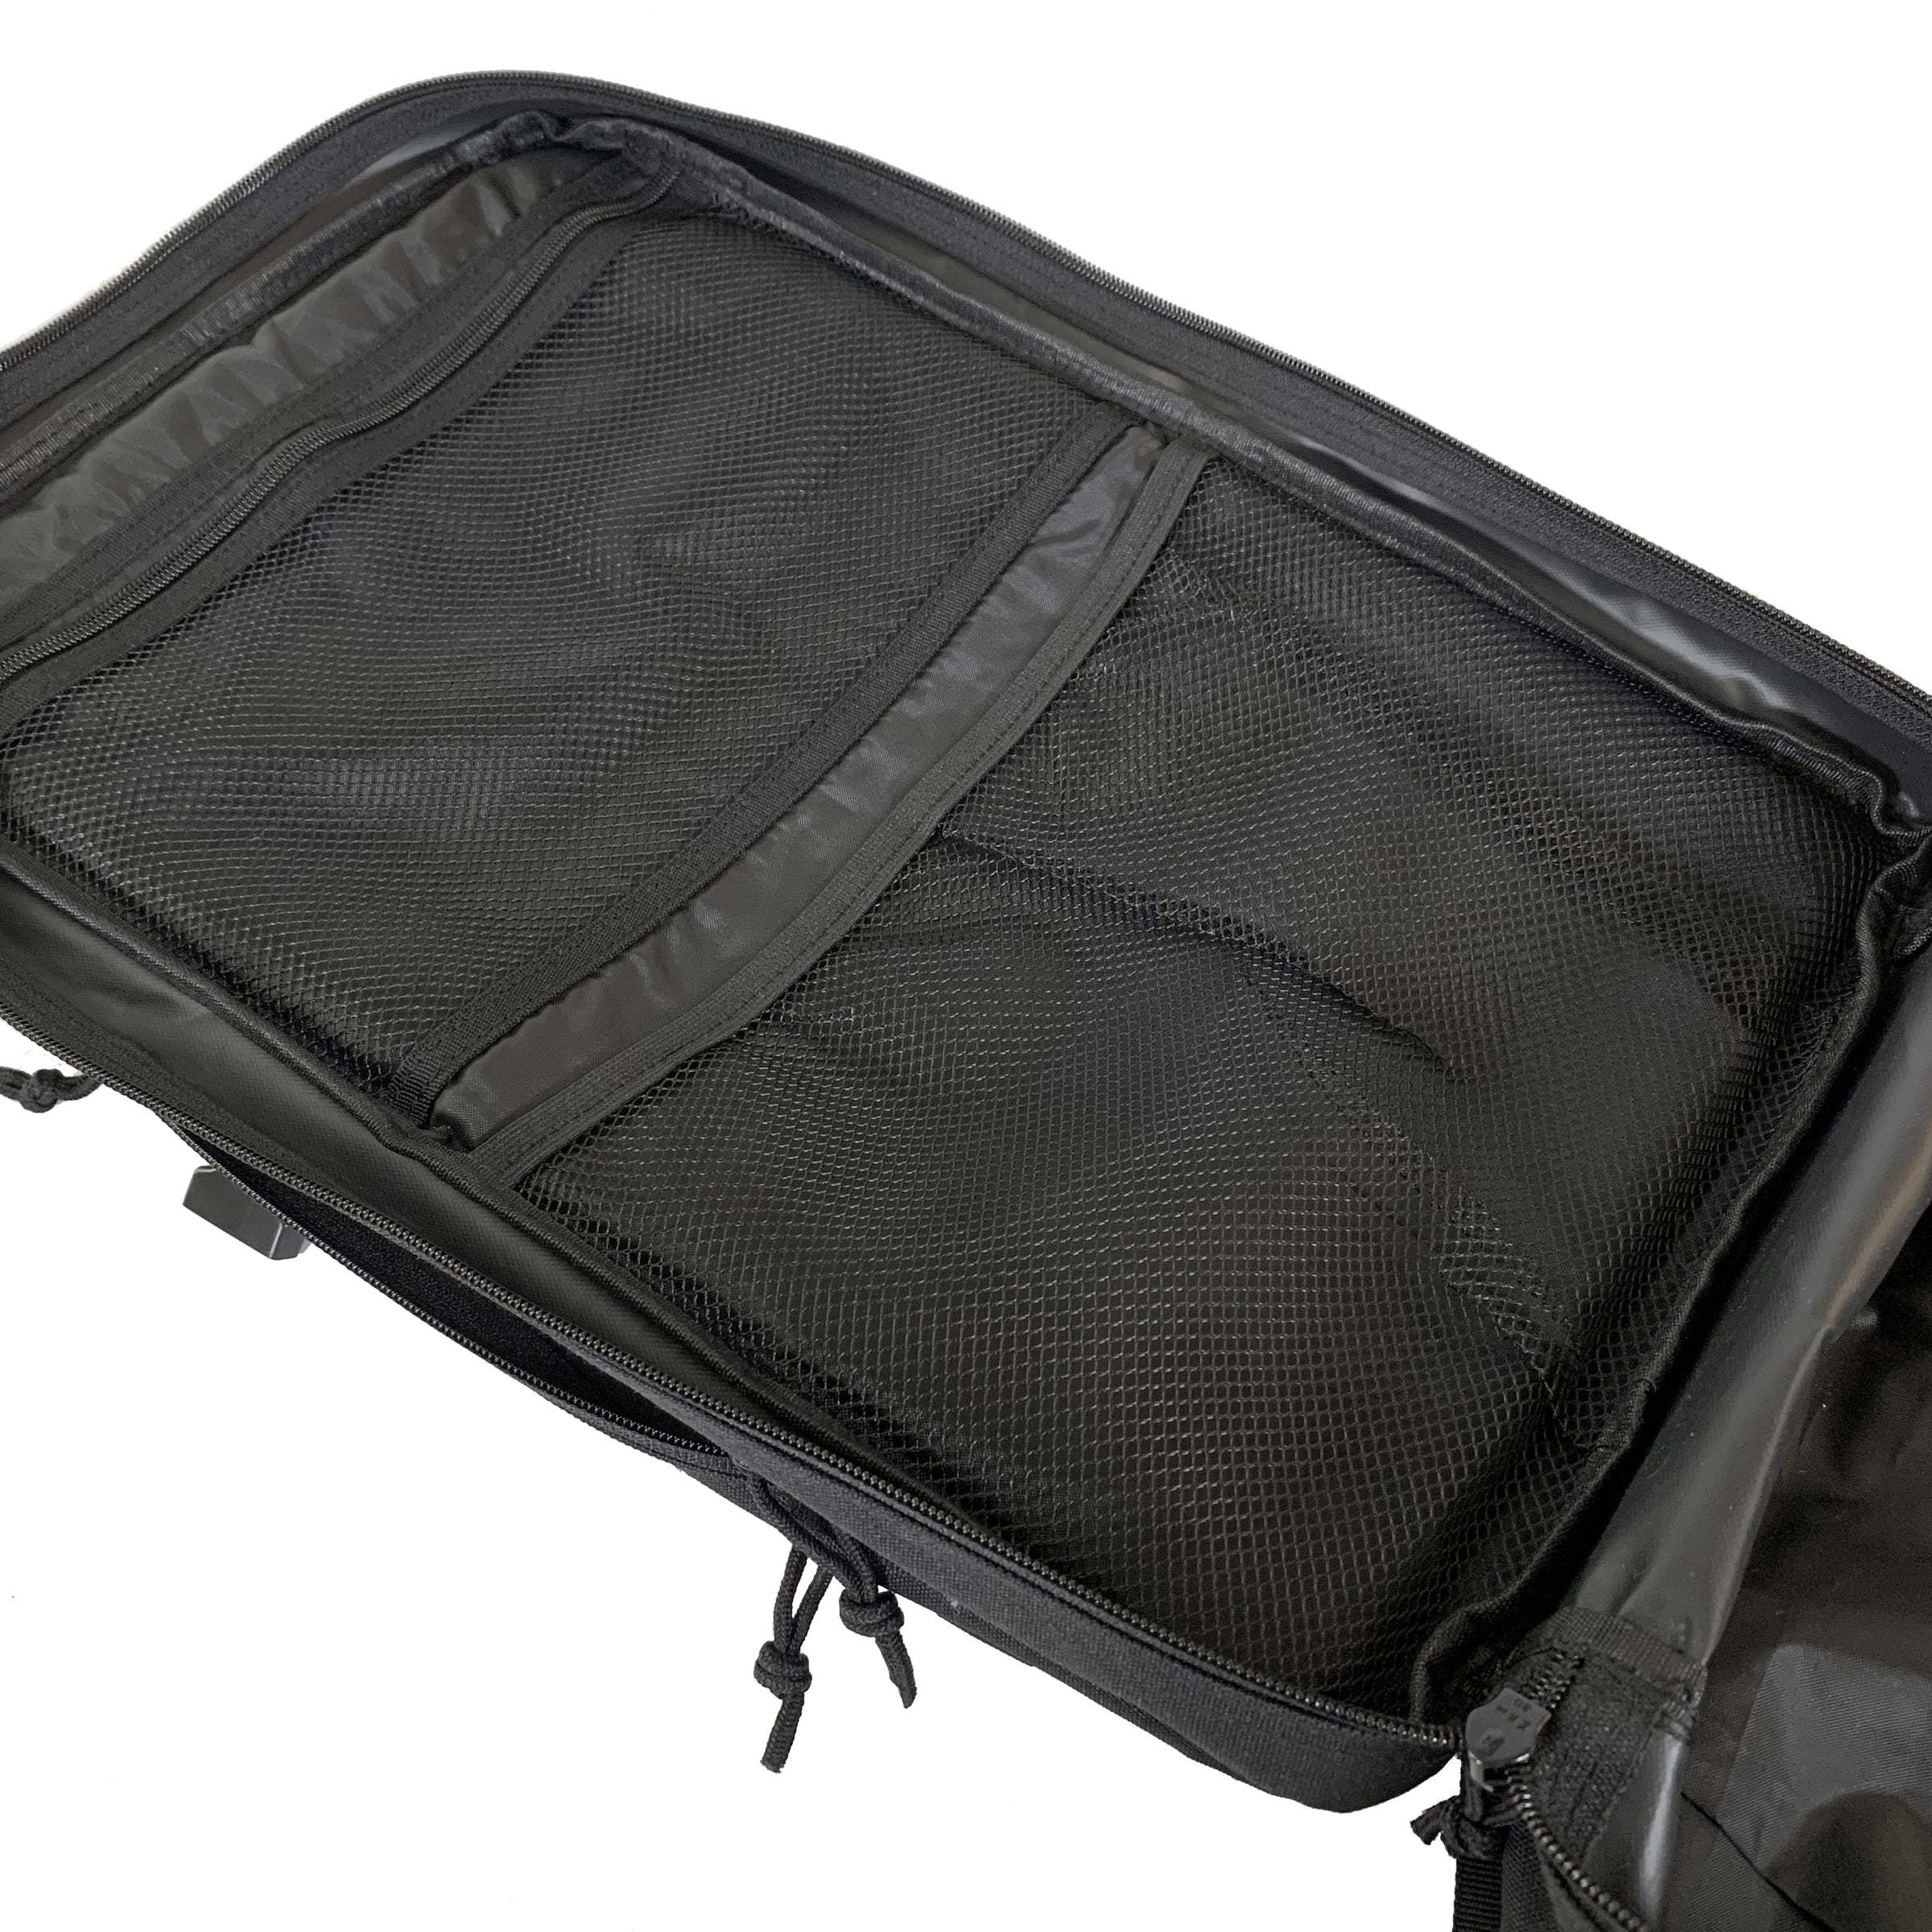 Gym Backpack - An Ultra Tough Adrenaline XL Backpack by Saber Alpha